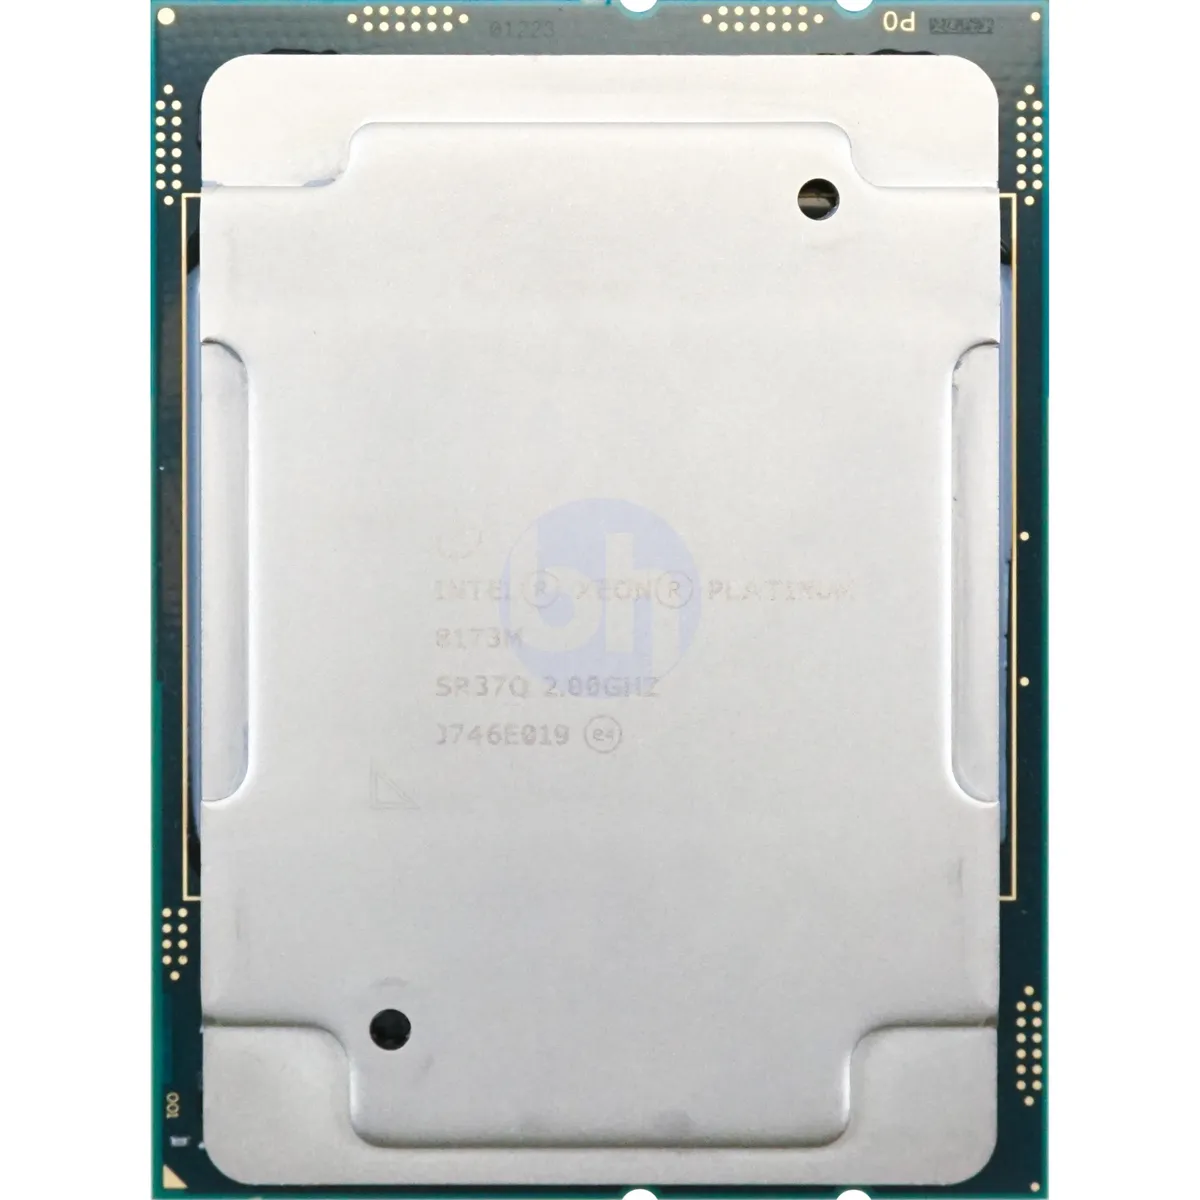 Intel Xeon Platinum 8173M (SR37Q) - 28-Core 2.00GHz LGA3647 38.5MB 165W CPU